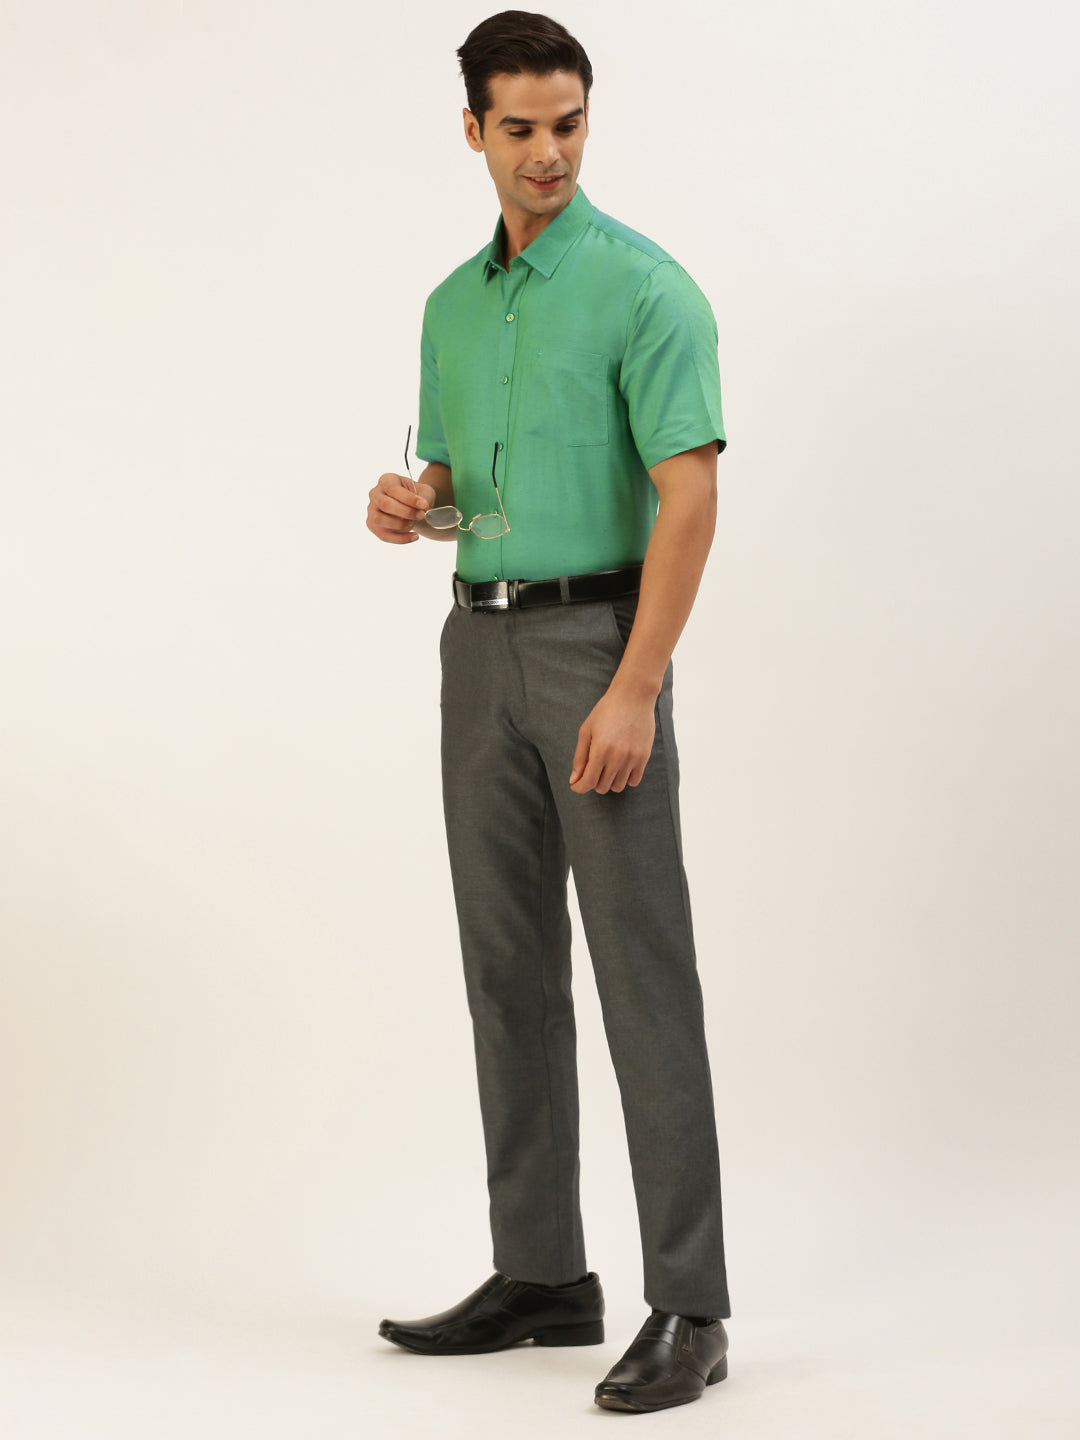 Mens Formal Shirt Half Sleeves Green CY10-Full view